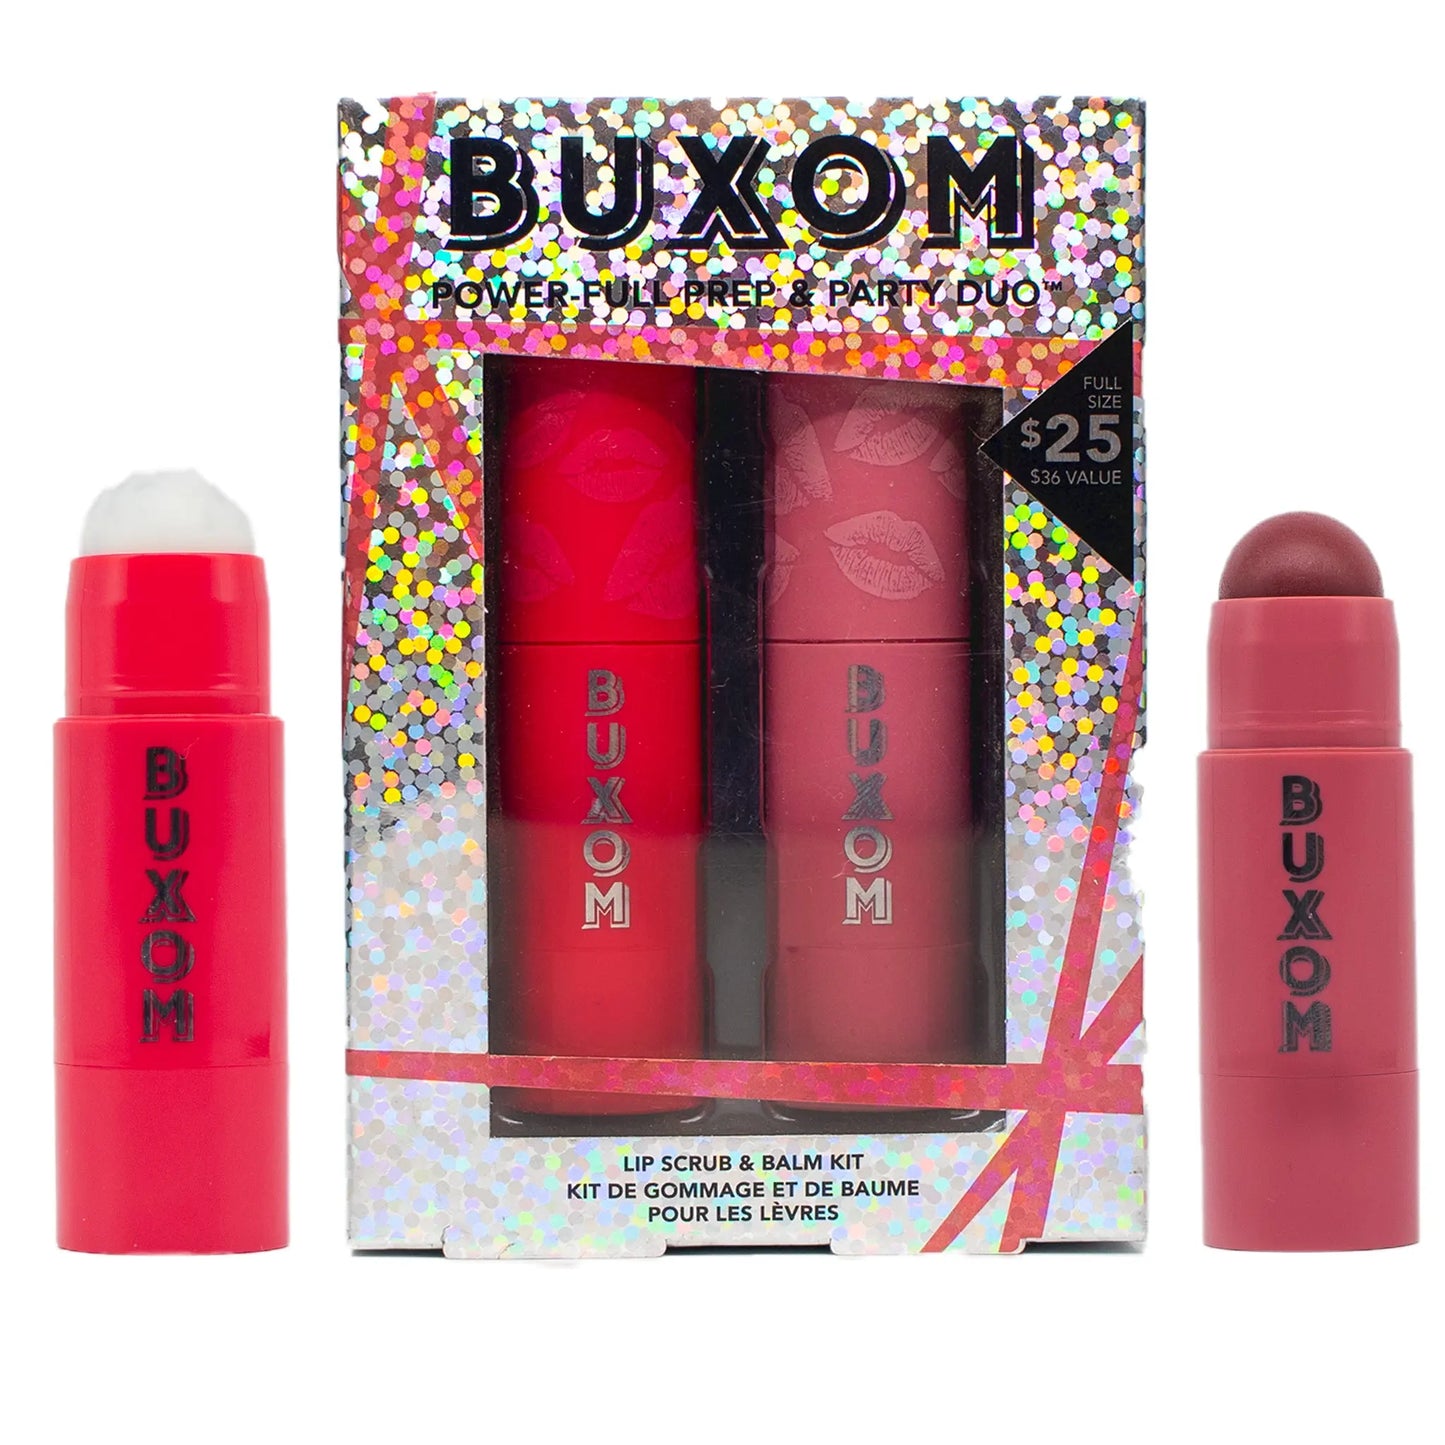 BUXOM Power-Full Prep & Party Duo (Lip Scrub & Balm) BUXOM